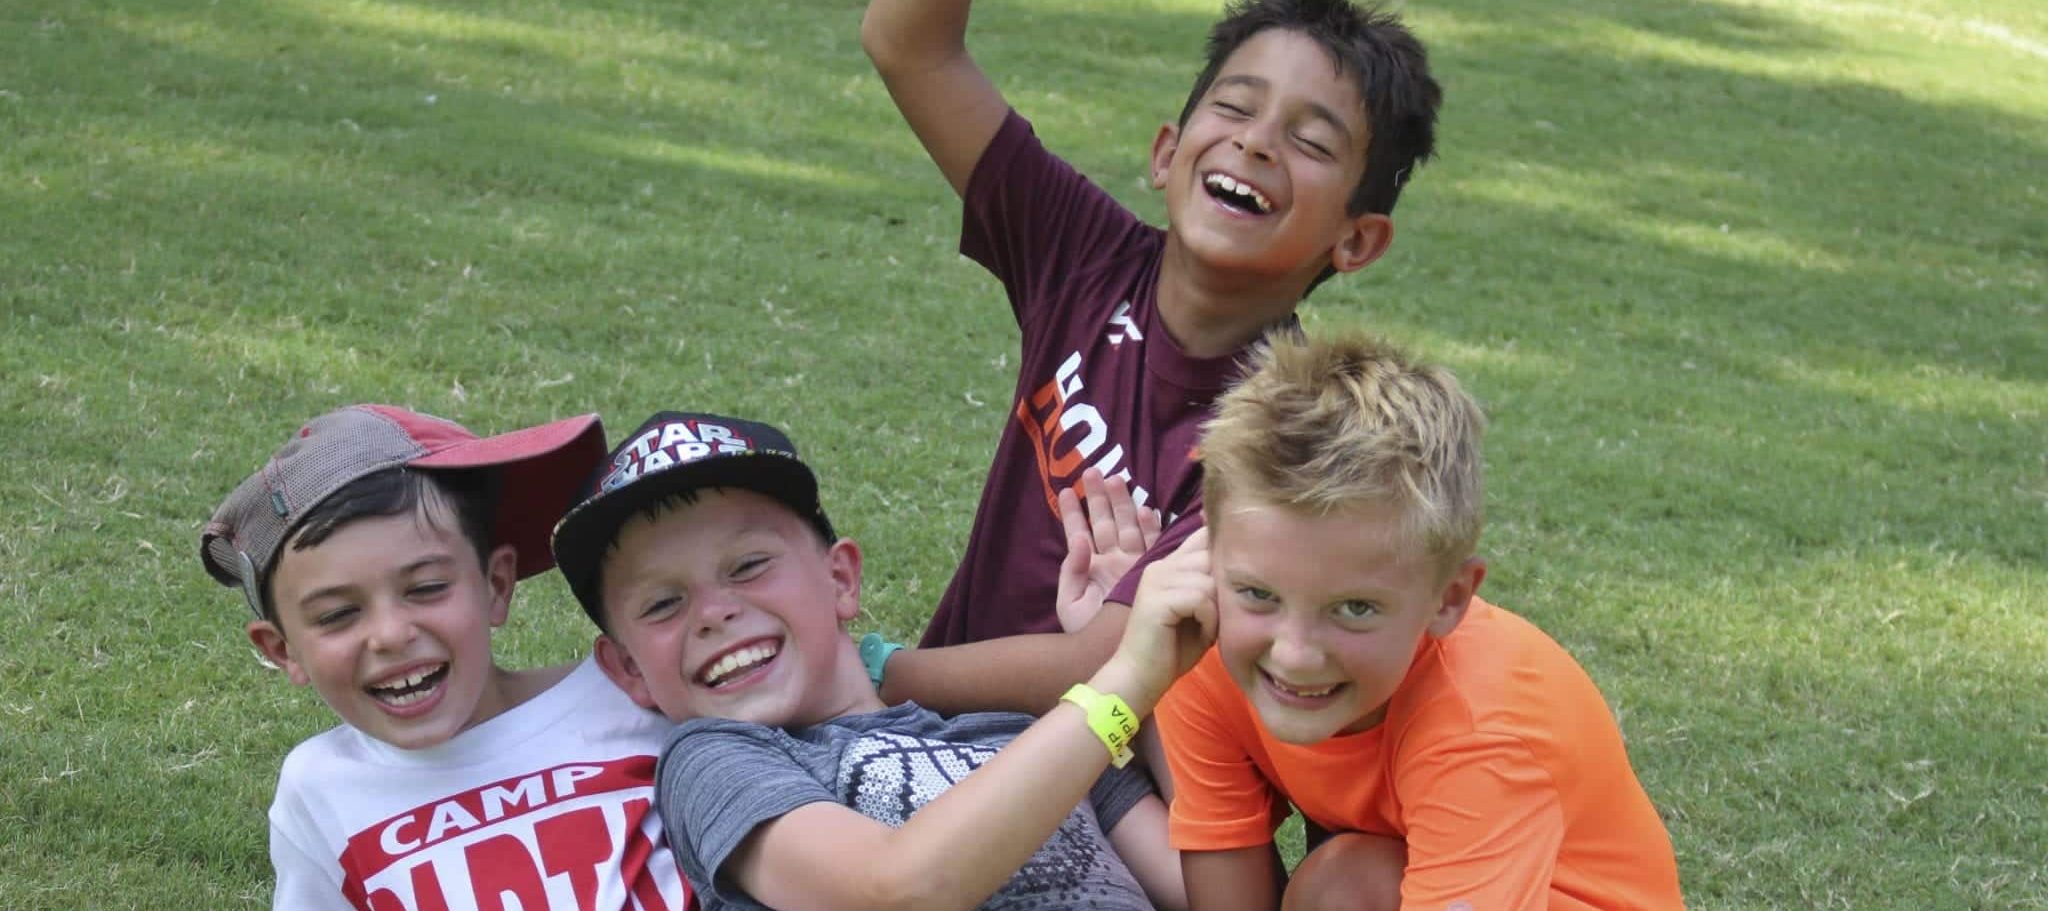 4 boys having fun outdoors at camp olympia